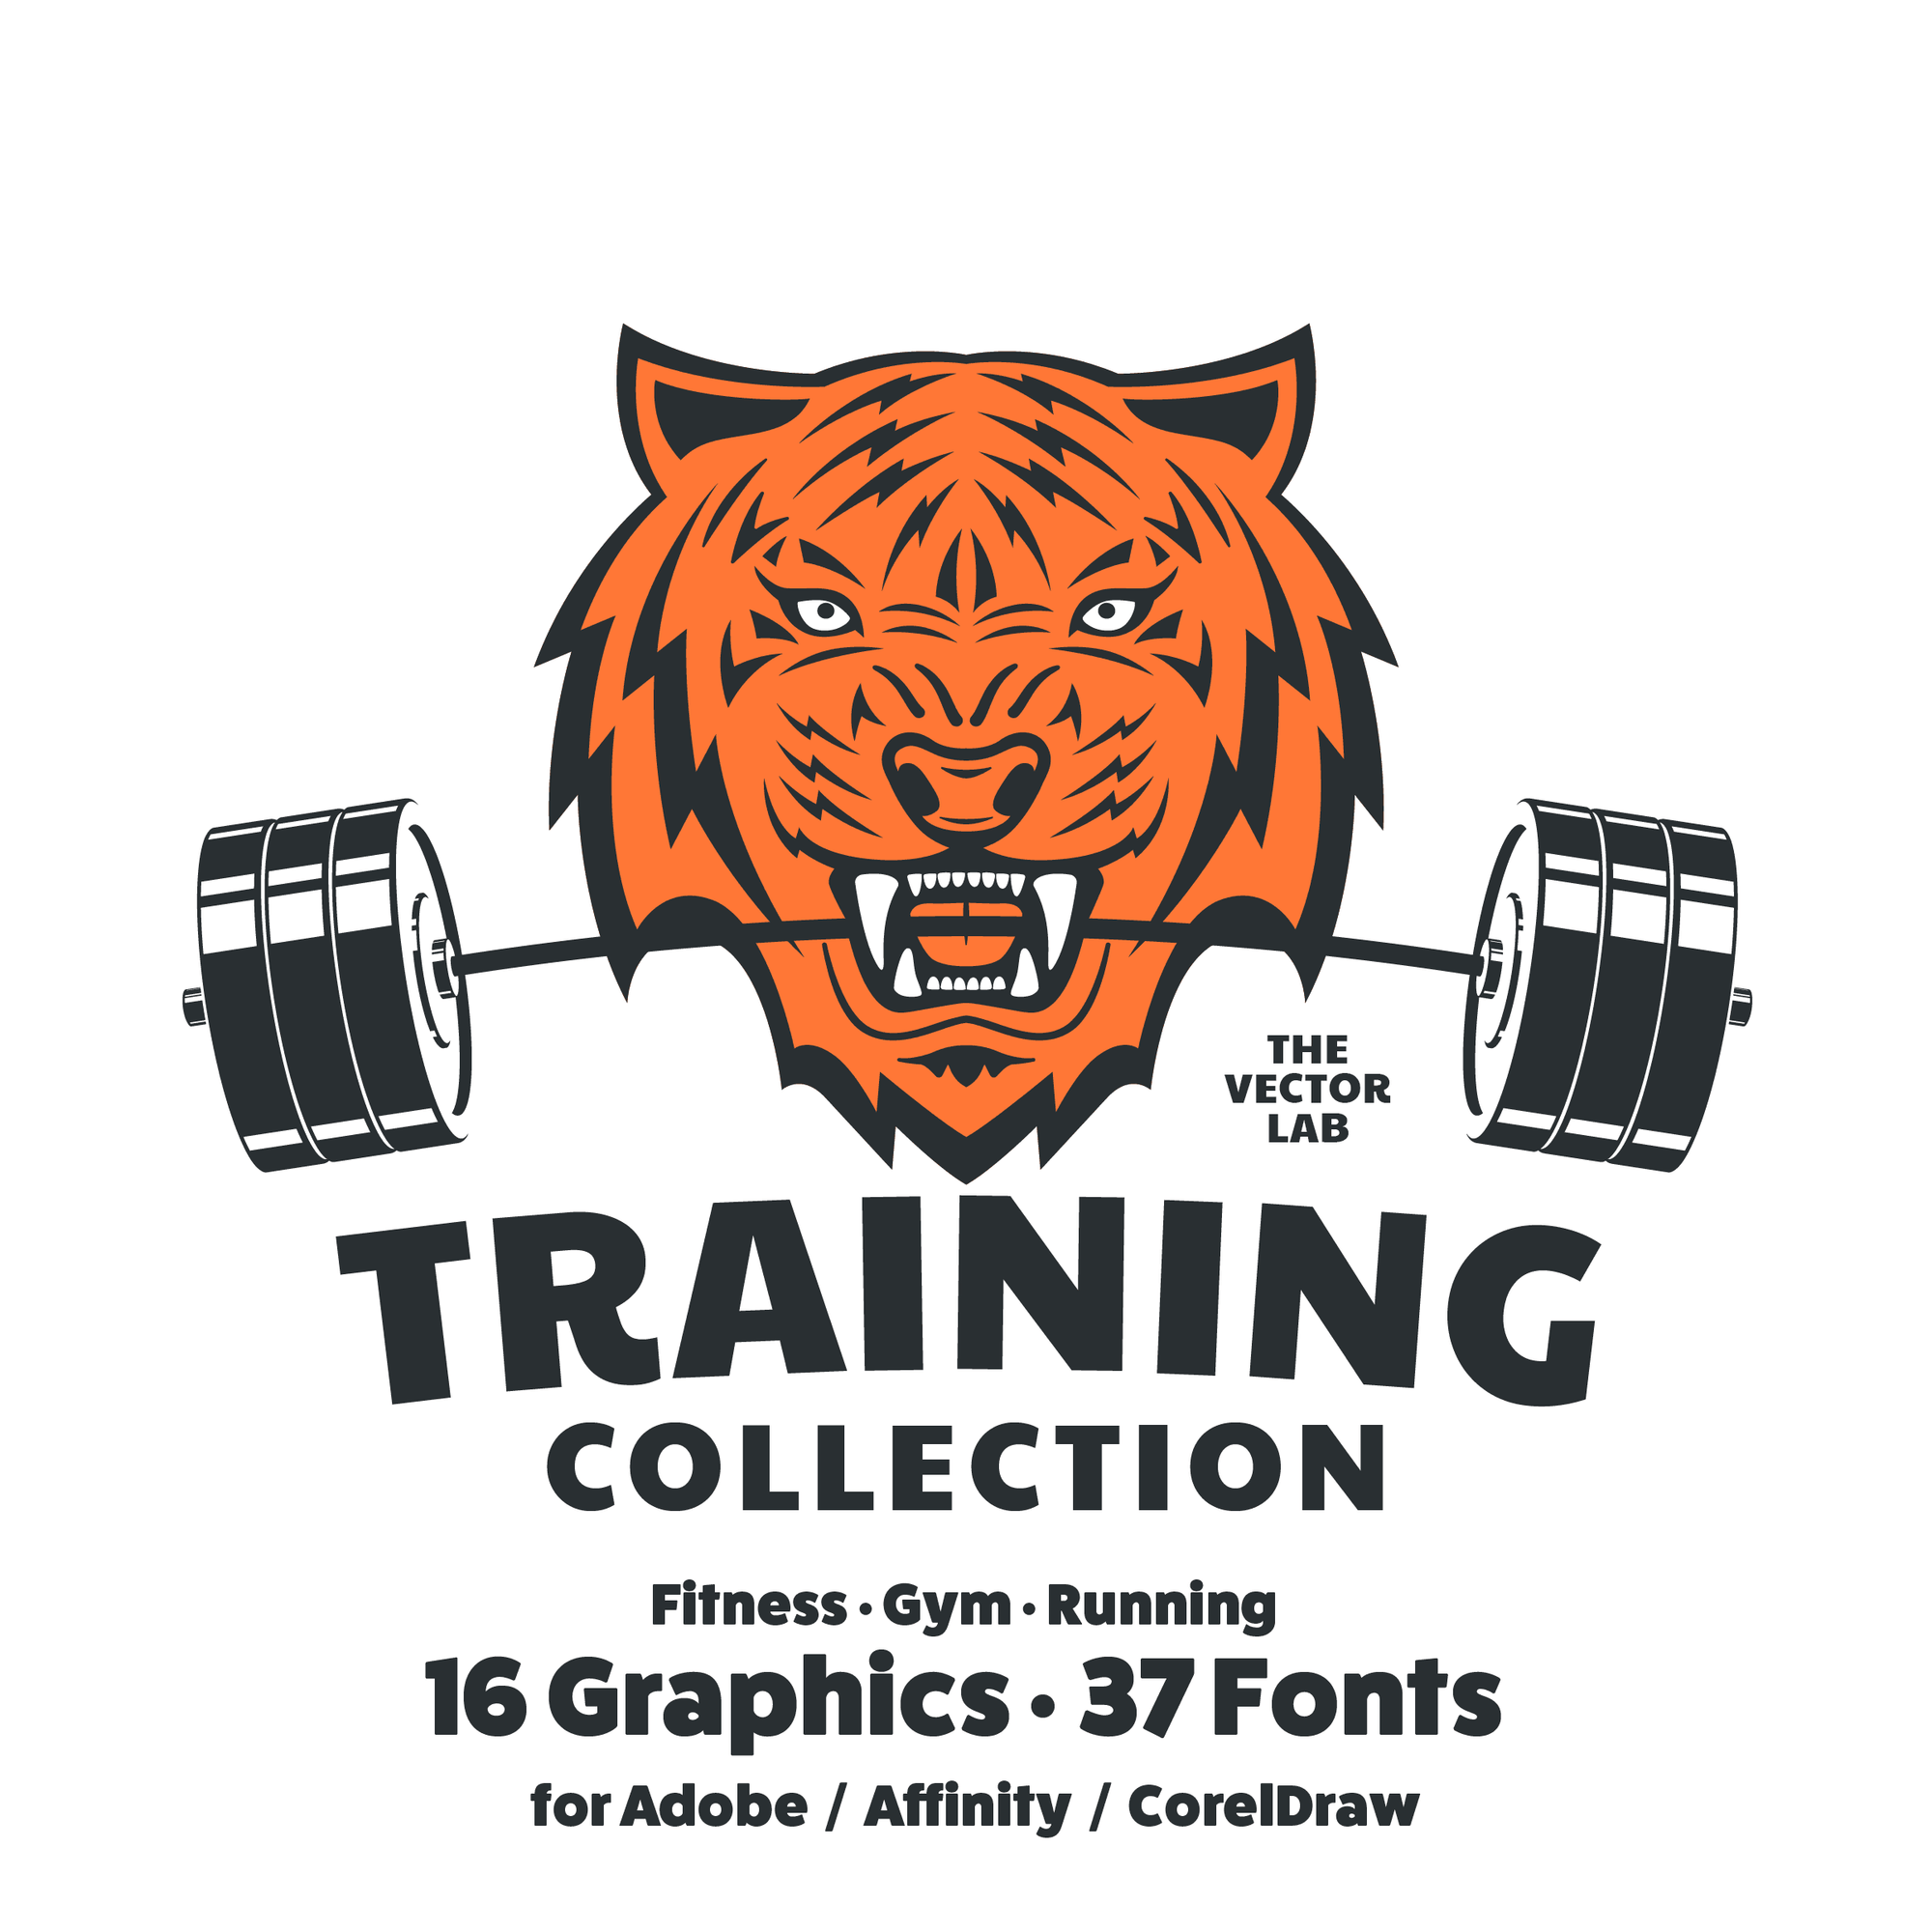 Training Graphic Logo Templates for Adobe Affinity CorelDraw